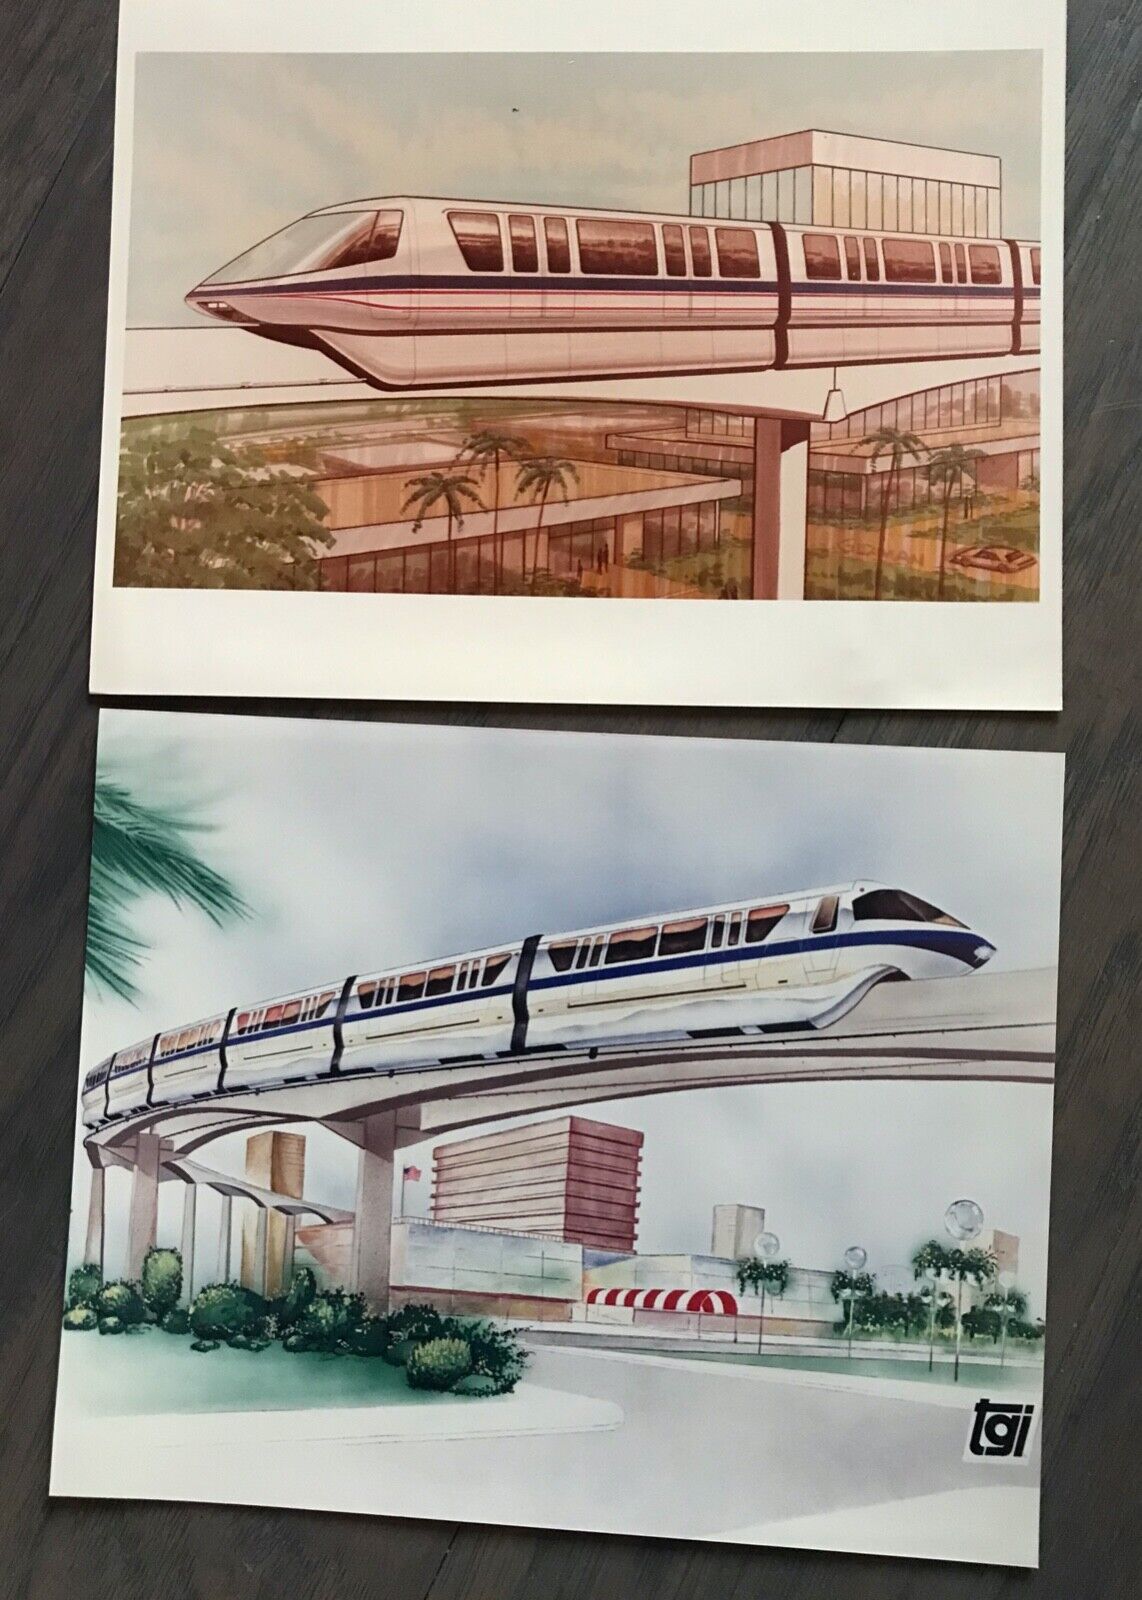 Disney Monorail Marketing photos (Bombardier / TGI )  2 photos from 1990's